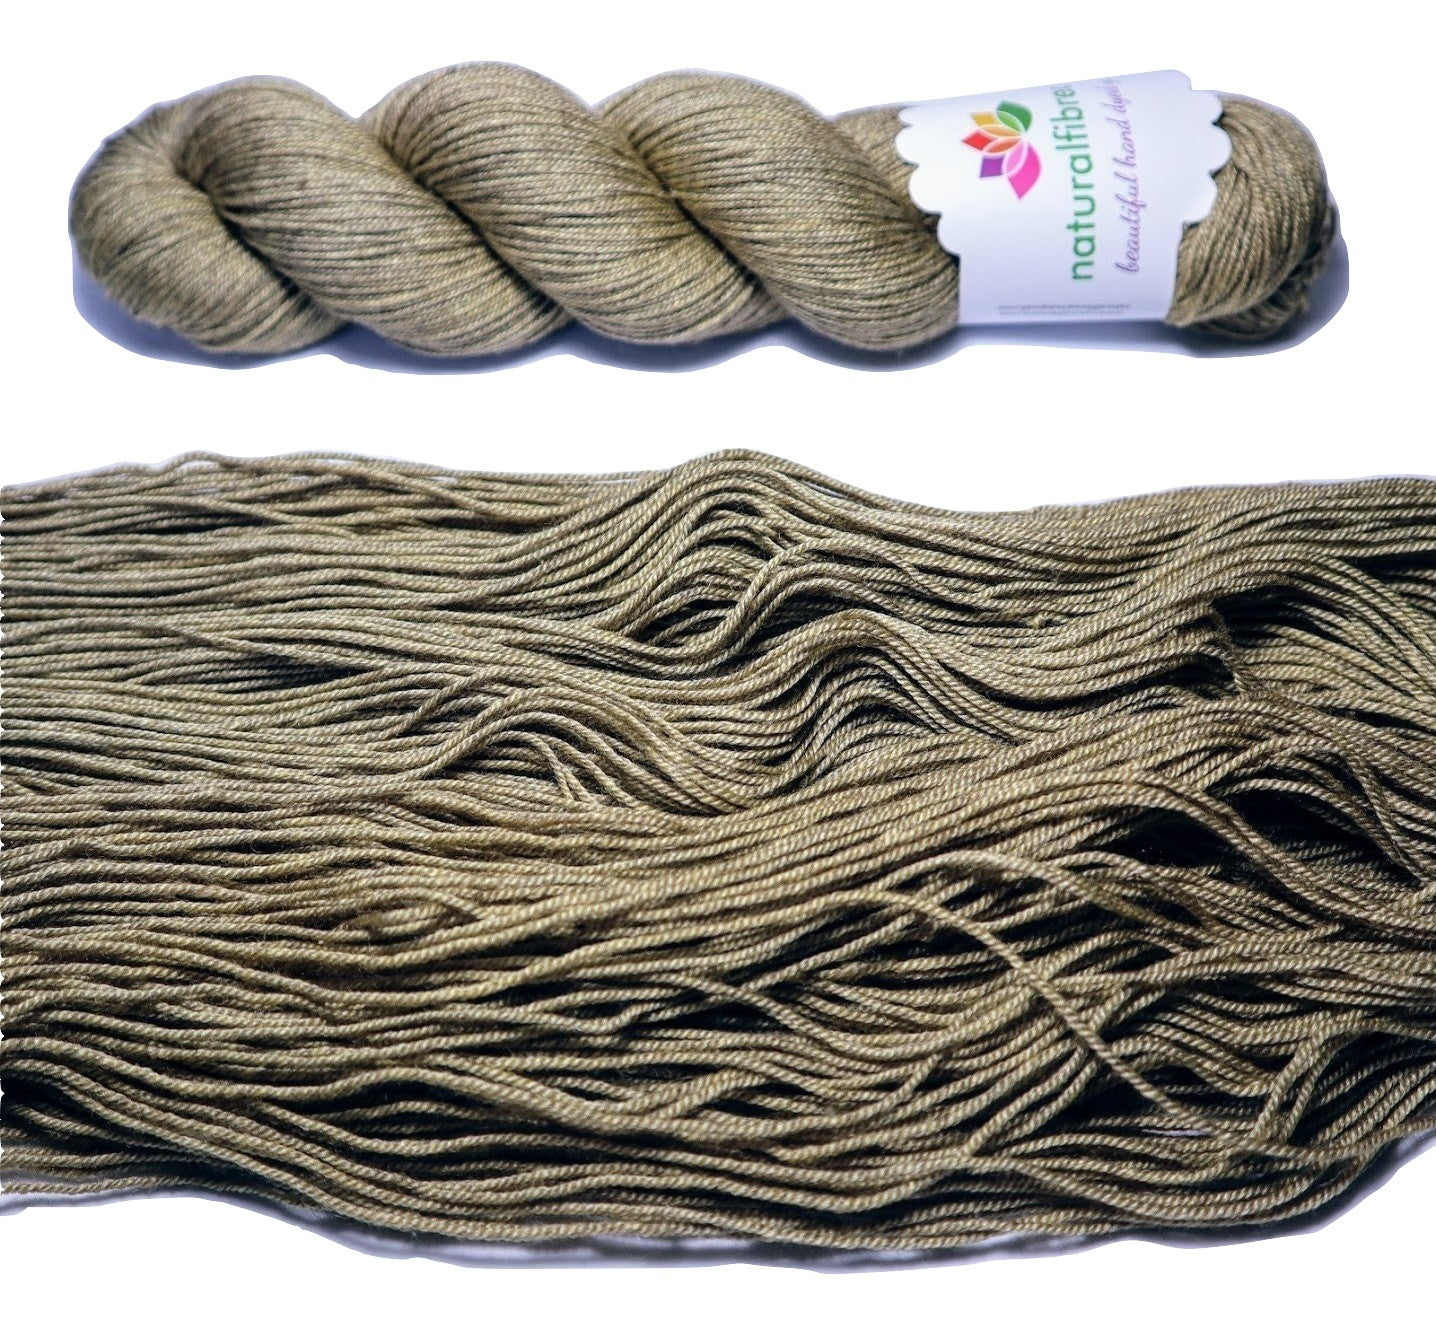 Hand dyed yarn. Pale gold, semi solid, hand dyed yarn on Merino Silk Yak fingering weight 4 ply yarn.